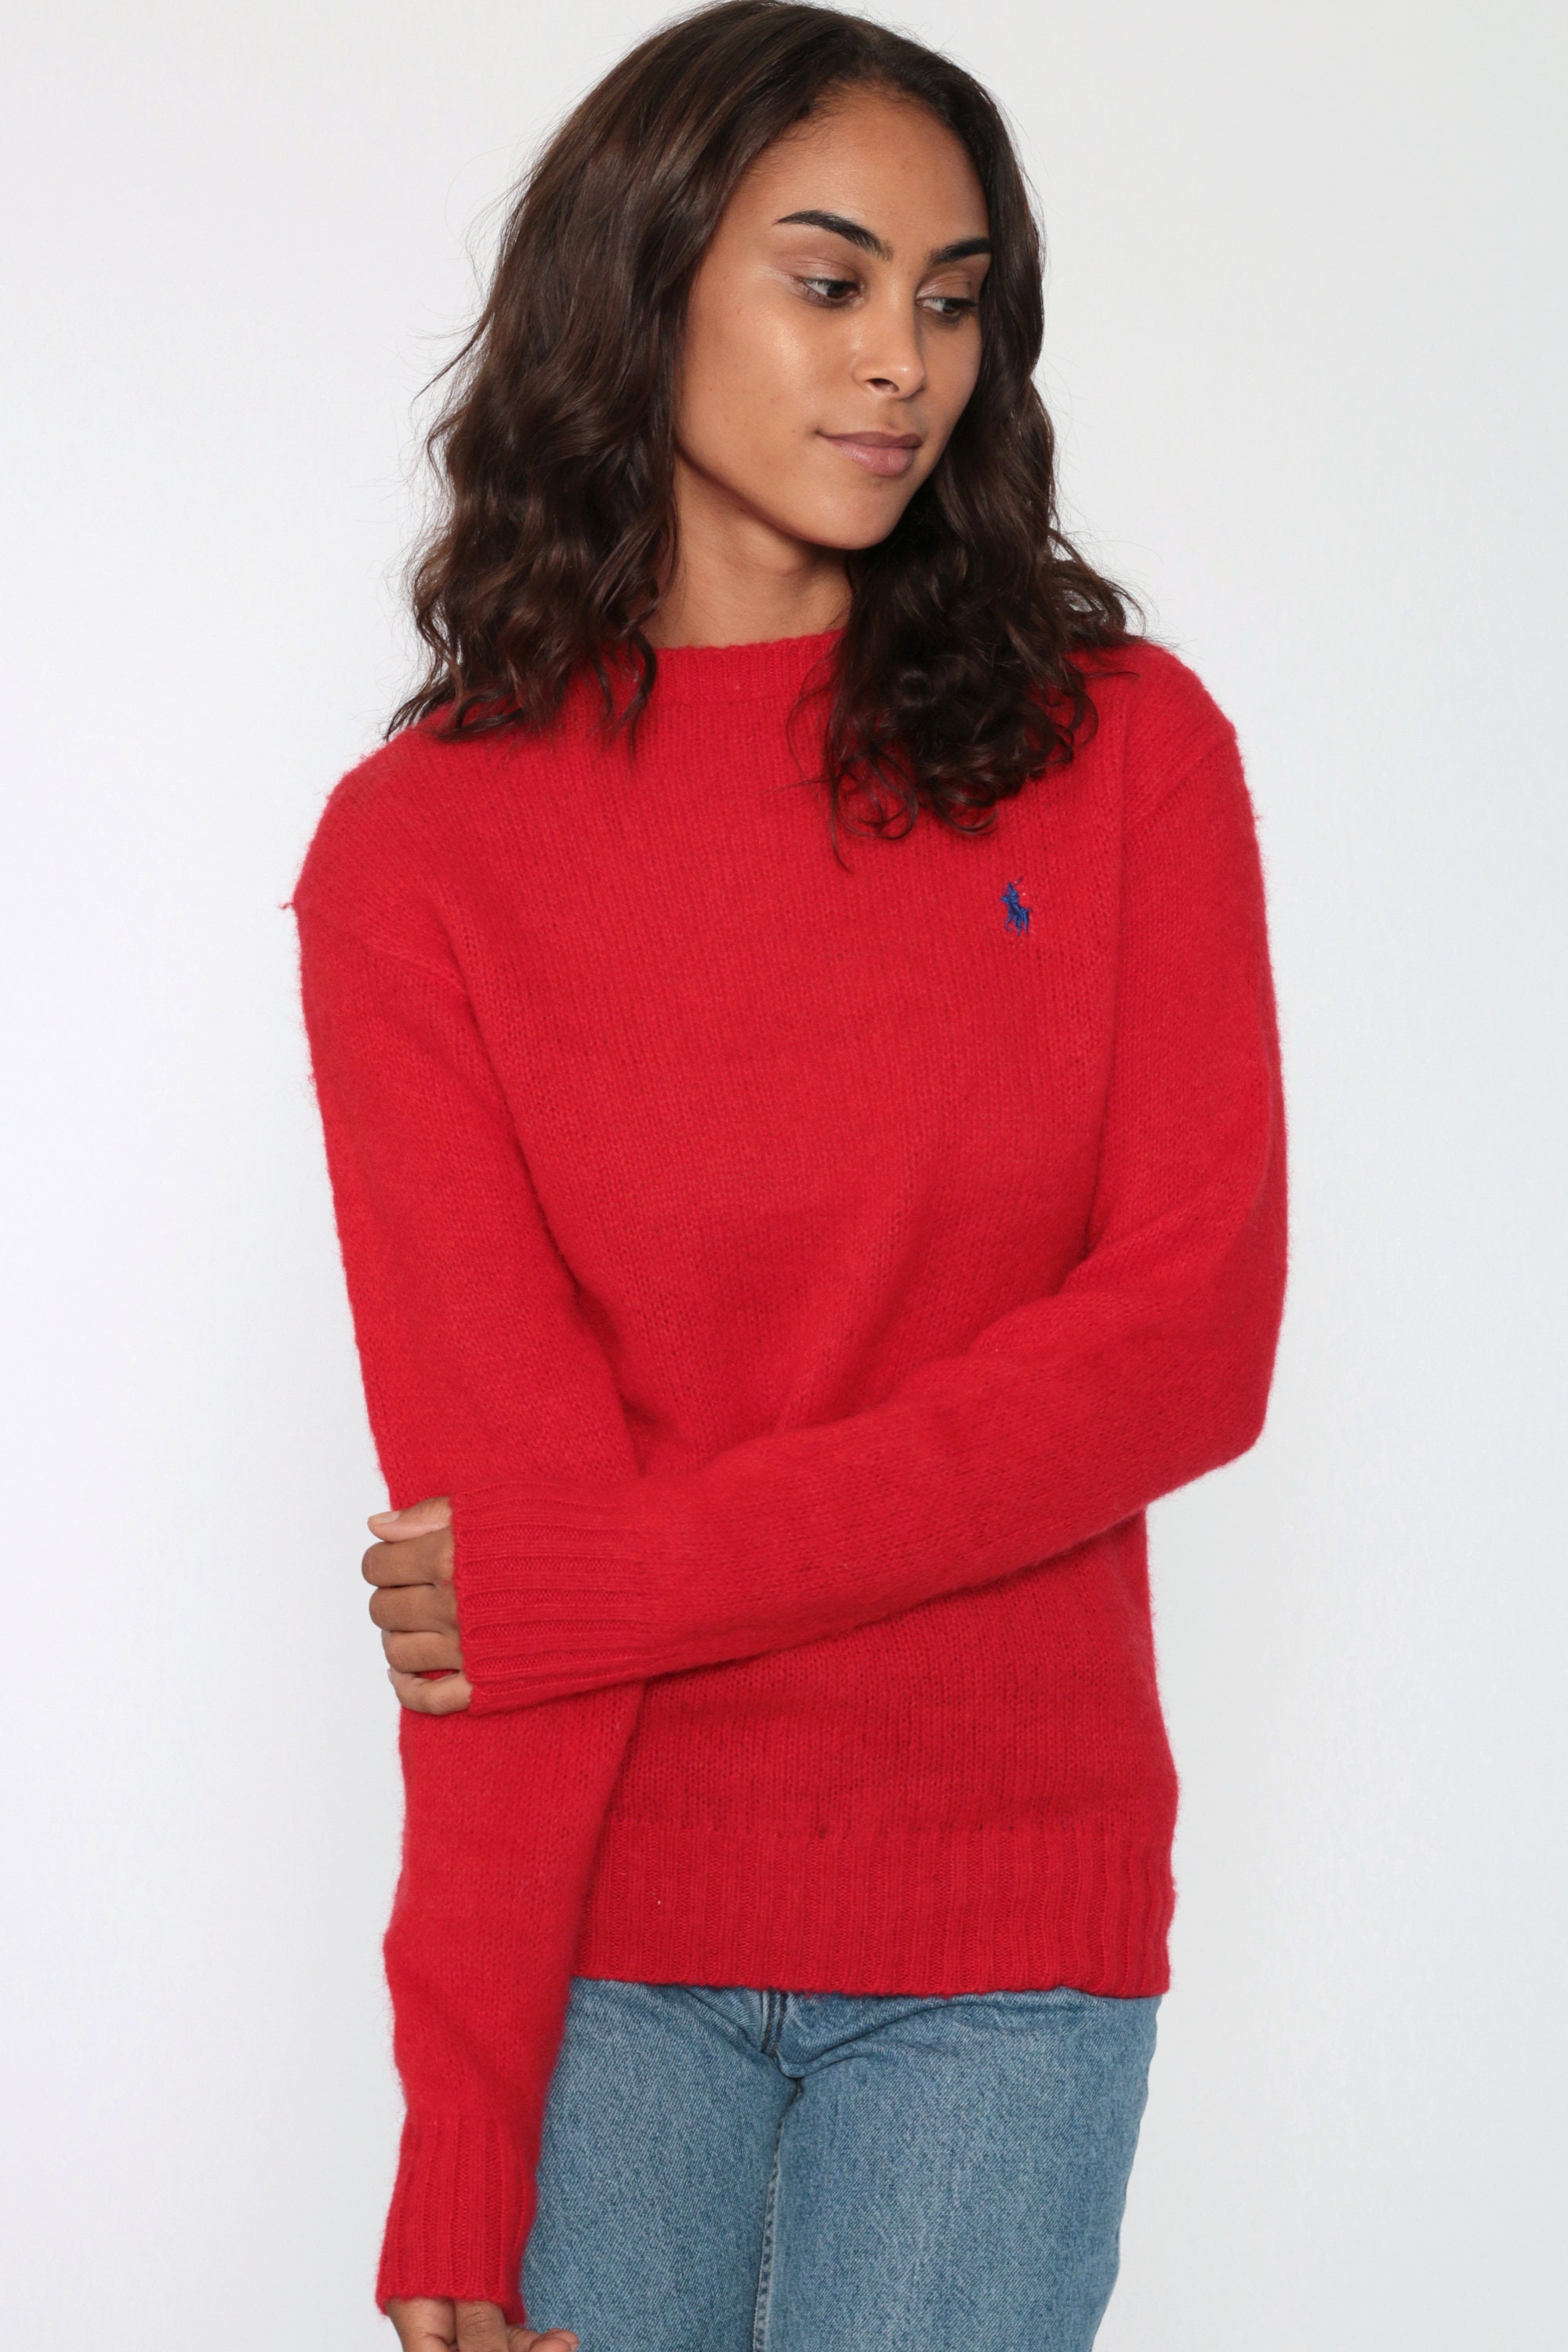 Ralph Lauren Sweater 90s WOOL Red Sweater Polo Sport Knit - Etsy